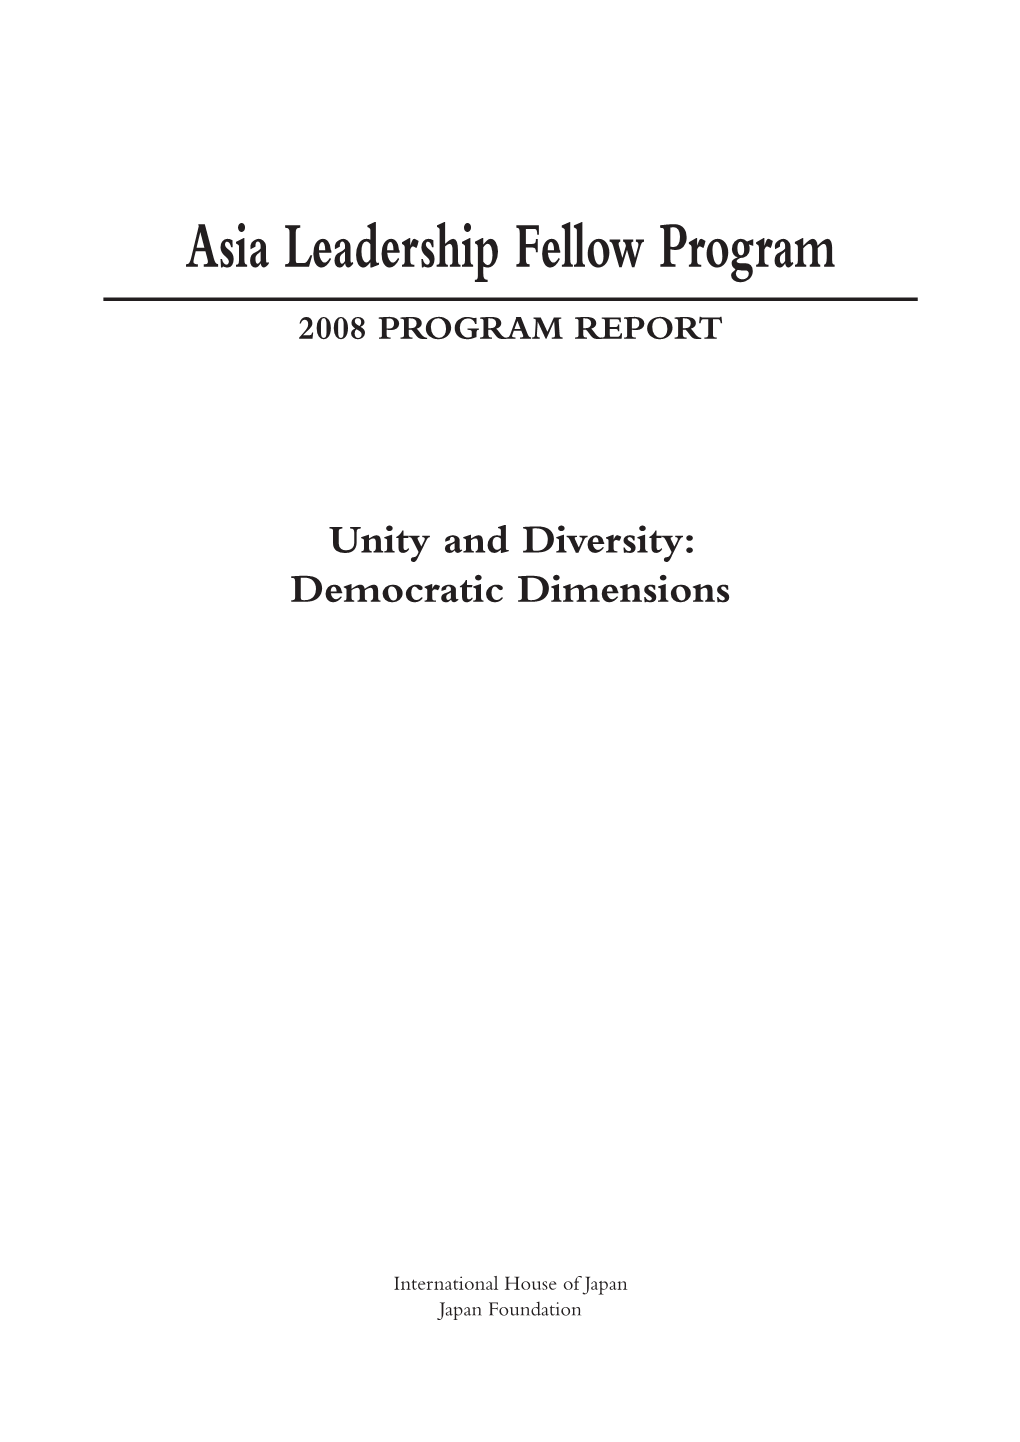 2008 Program Report